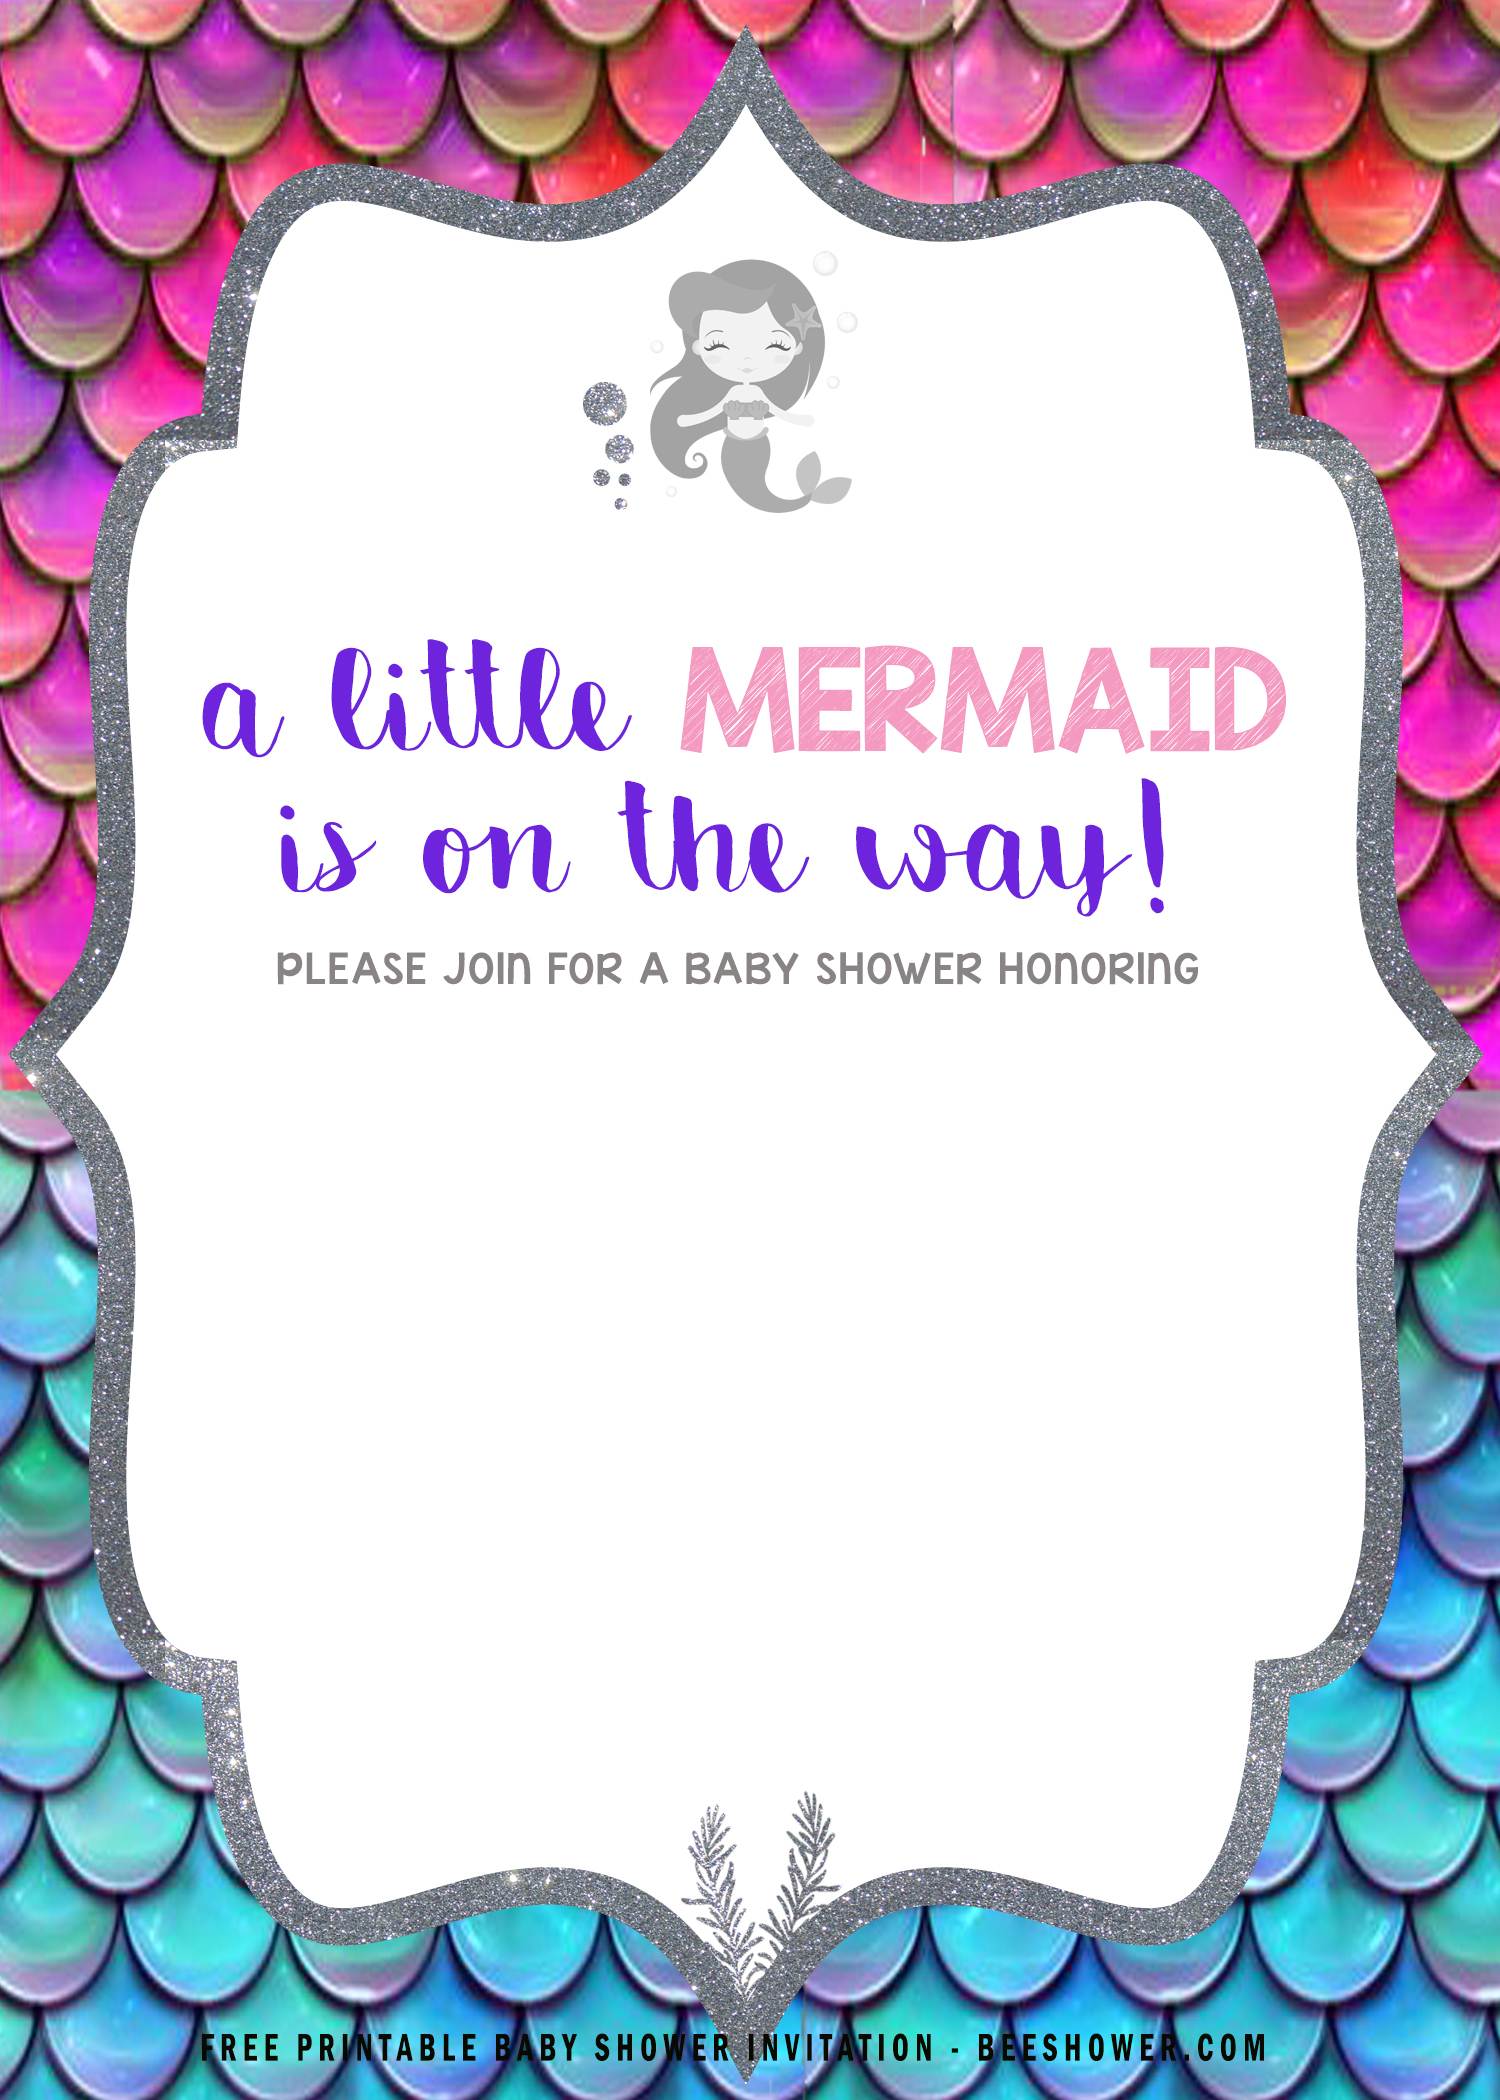 FREE Mermaids Baby Shower Invitation Templates  FREE Printable Within Baby Shower Flyer Templates Free